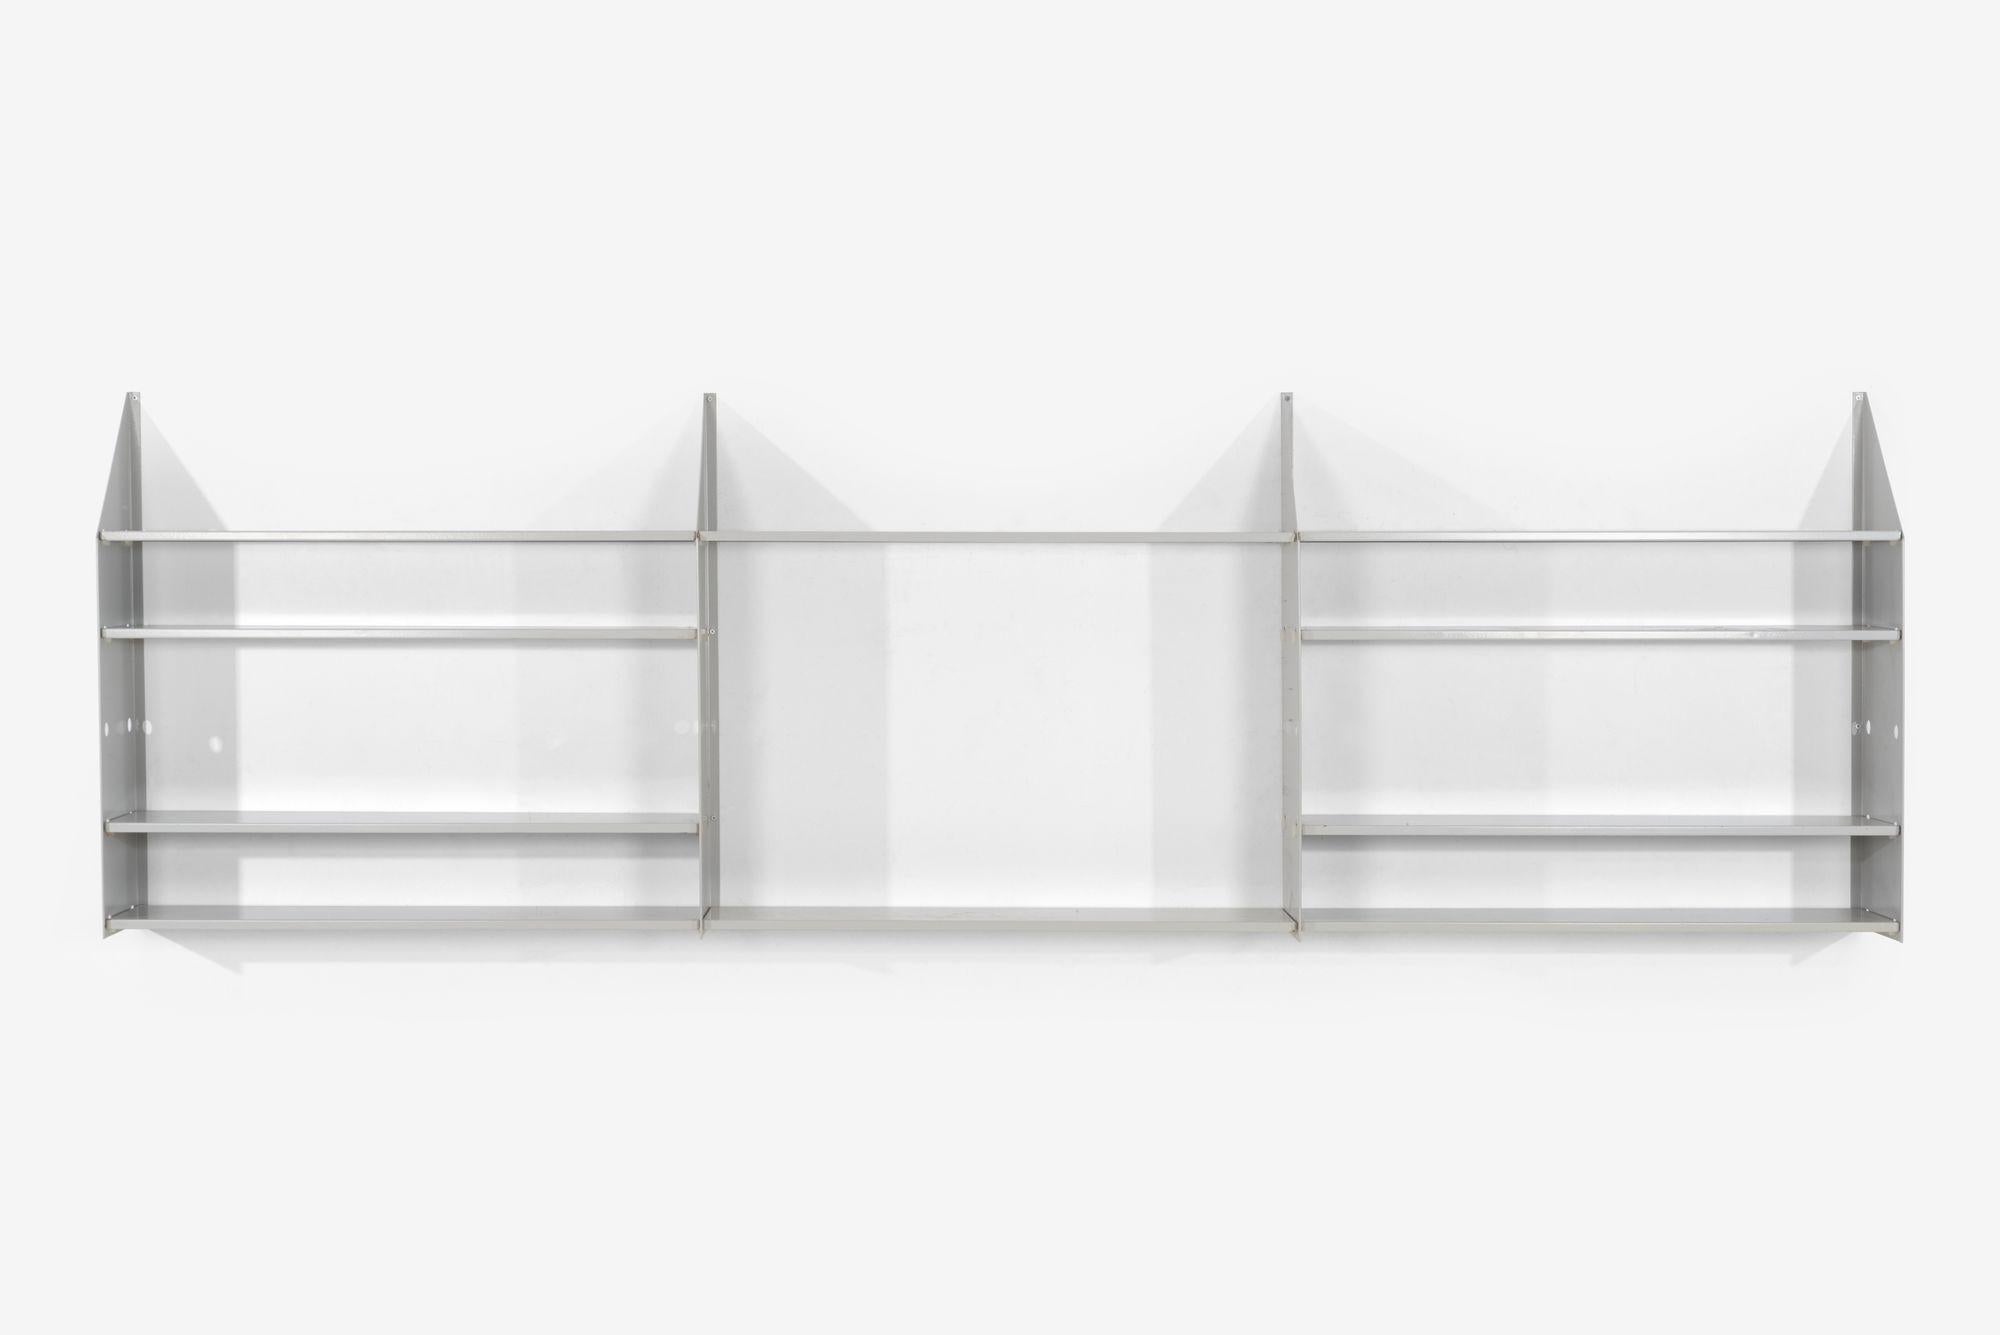 Enzo Mari dima modular wall shelving system for Simon International Dima Italy, circa 1970
Enameled steel, shelves adjustable with solid plastic holders.

Measures : Each individule shelve: 36 1/4